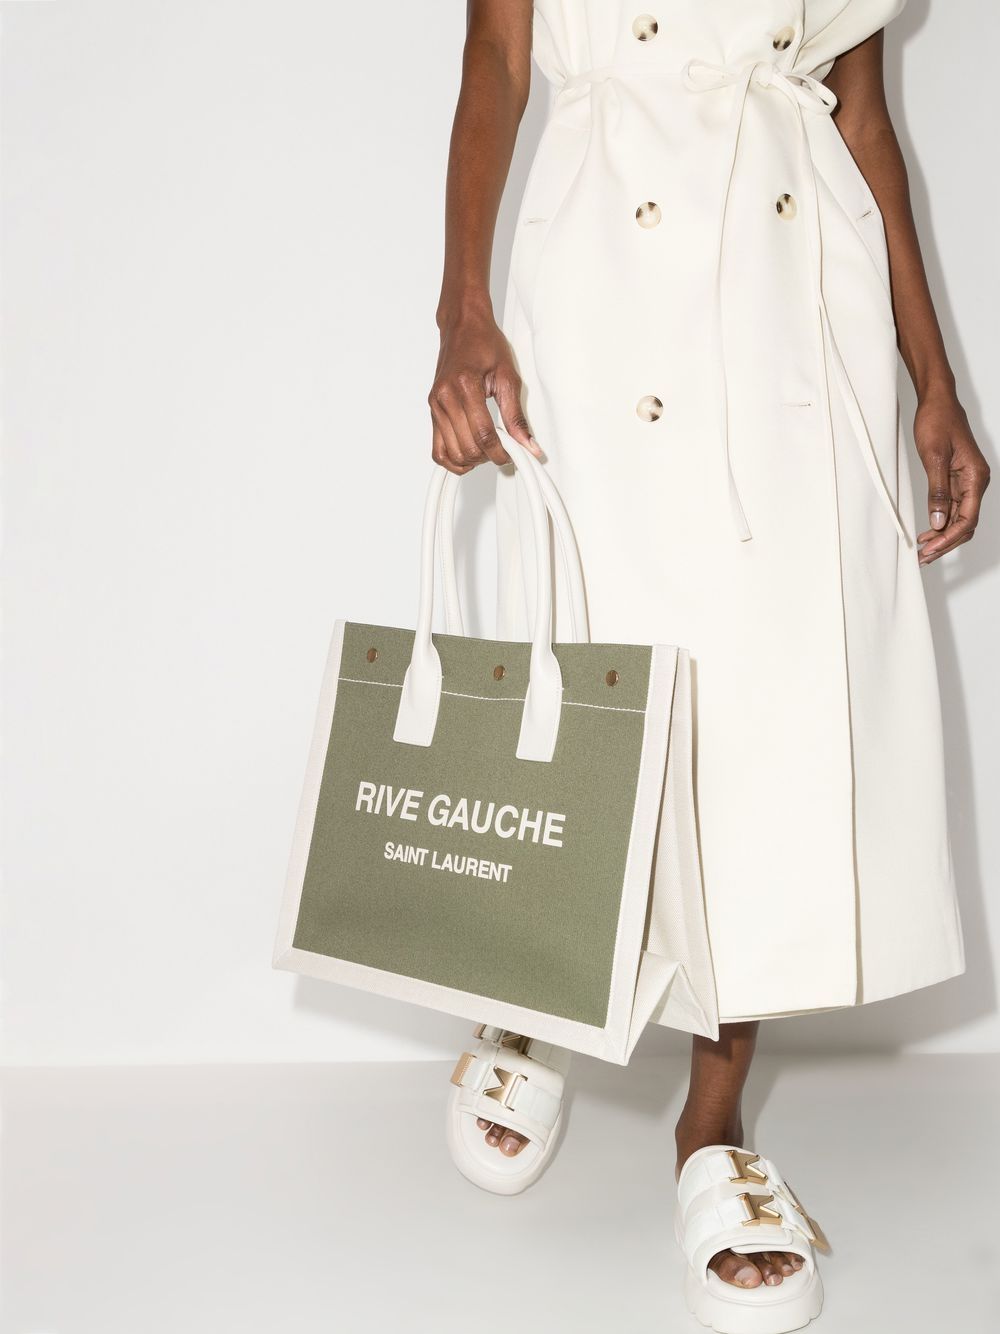 Saint Laurent Rive Gauche Tote Bag, $1,250, farfetch.com